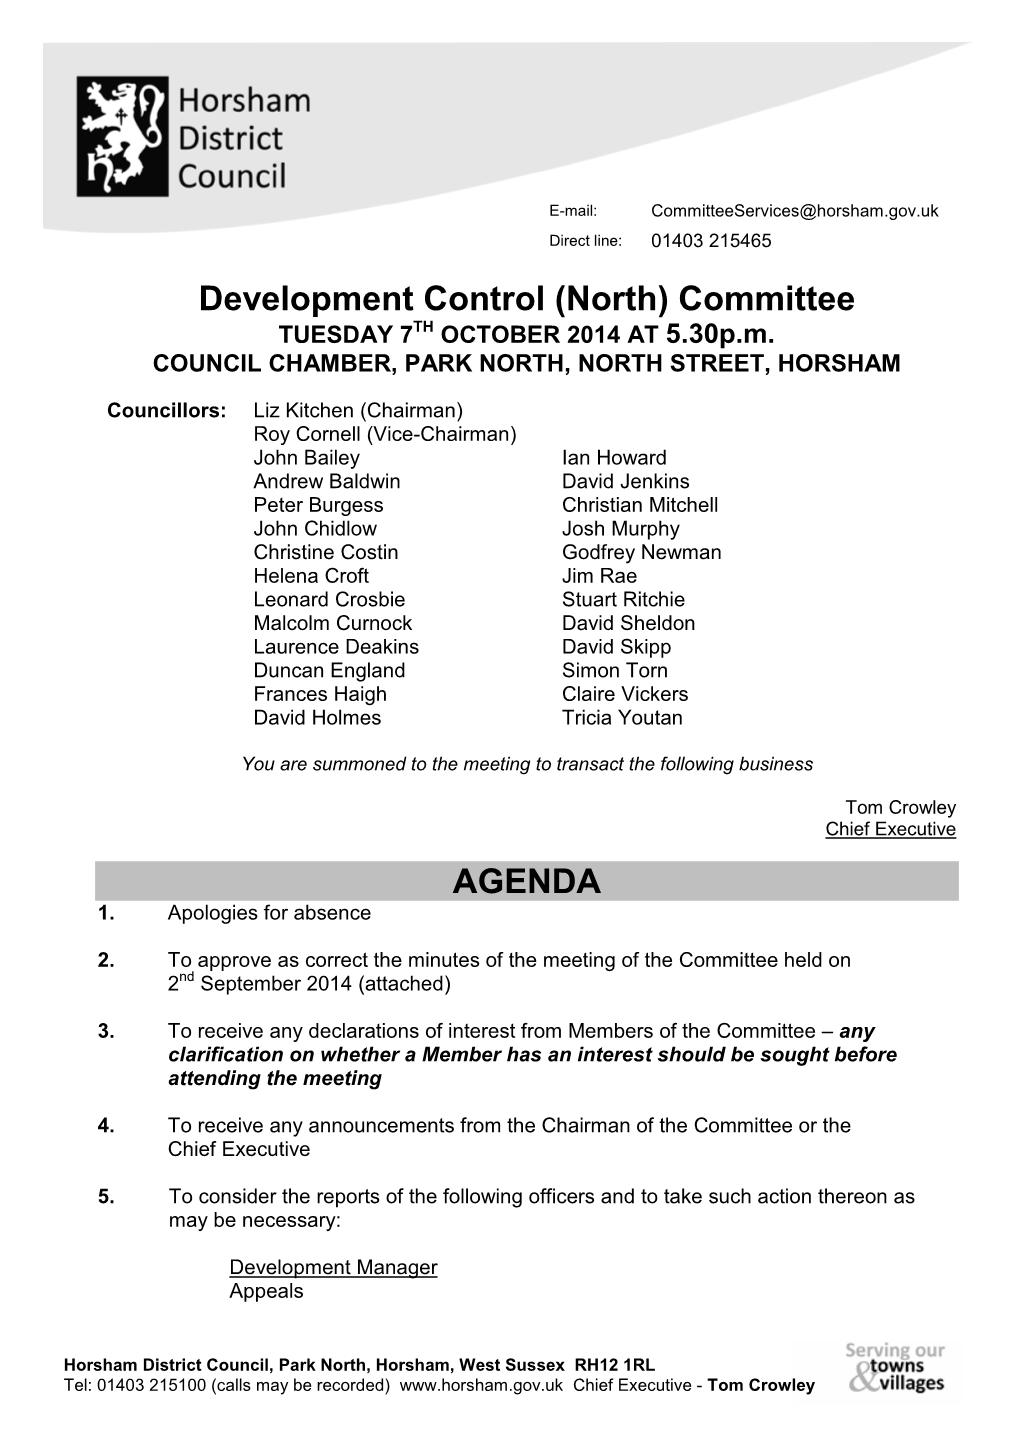 Development Control (North) Committee AGENDA